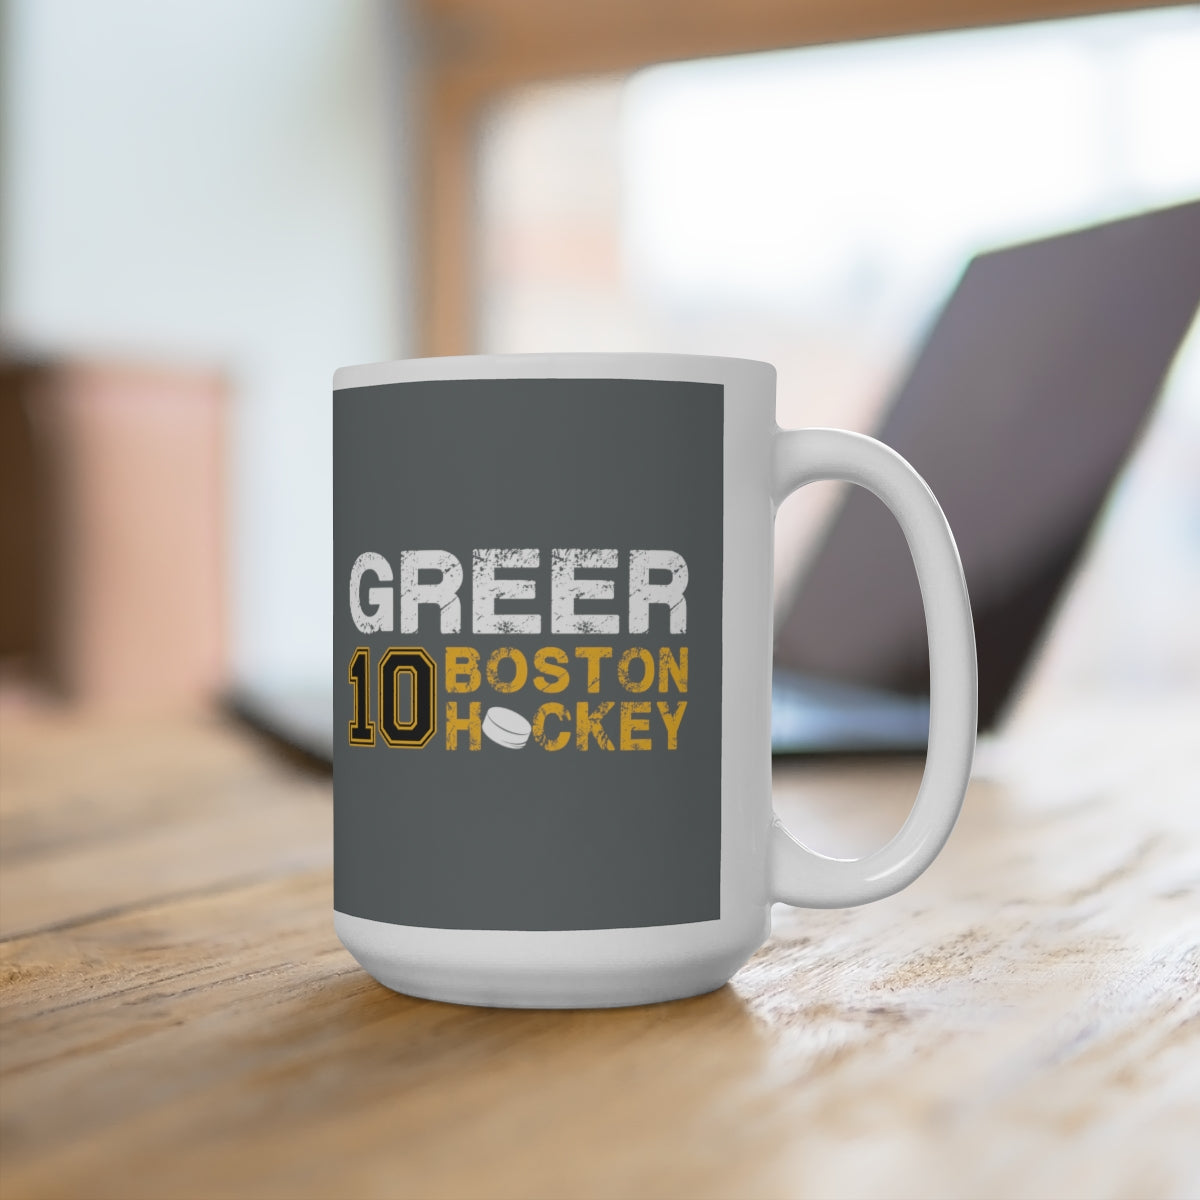 Greer 10 Boston Hockey Ceramic Coffee Mug In Gray, 15oz